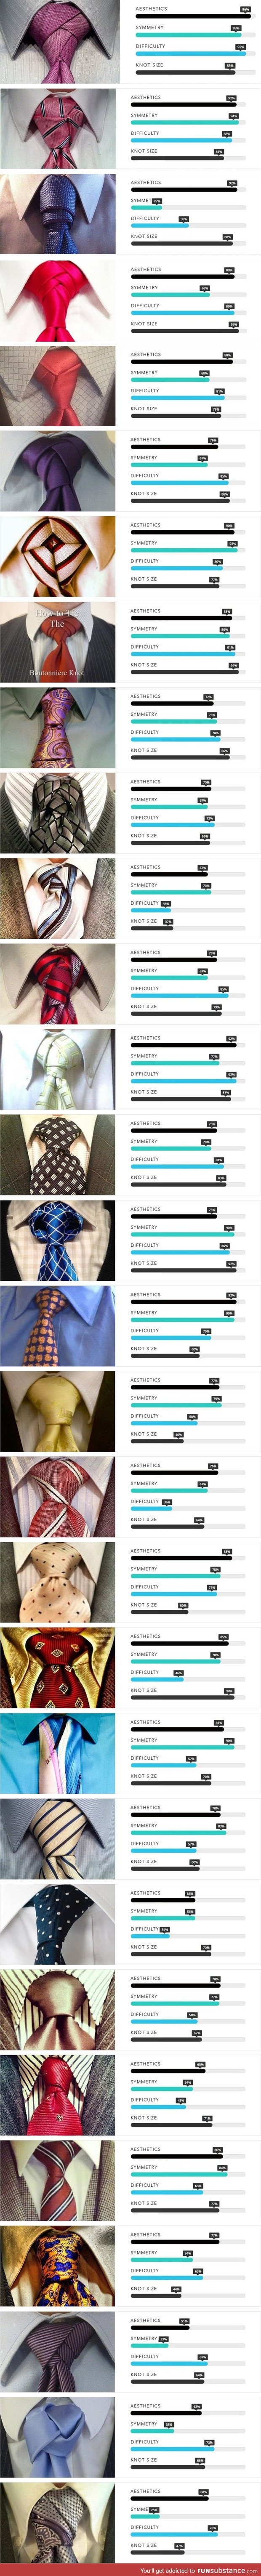 List of most popular tie knots